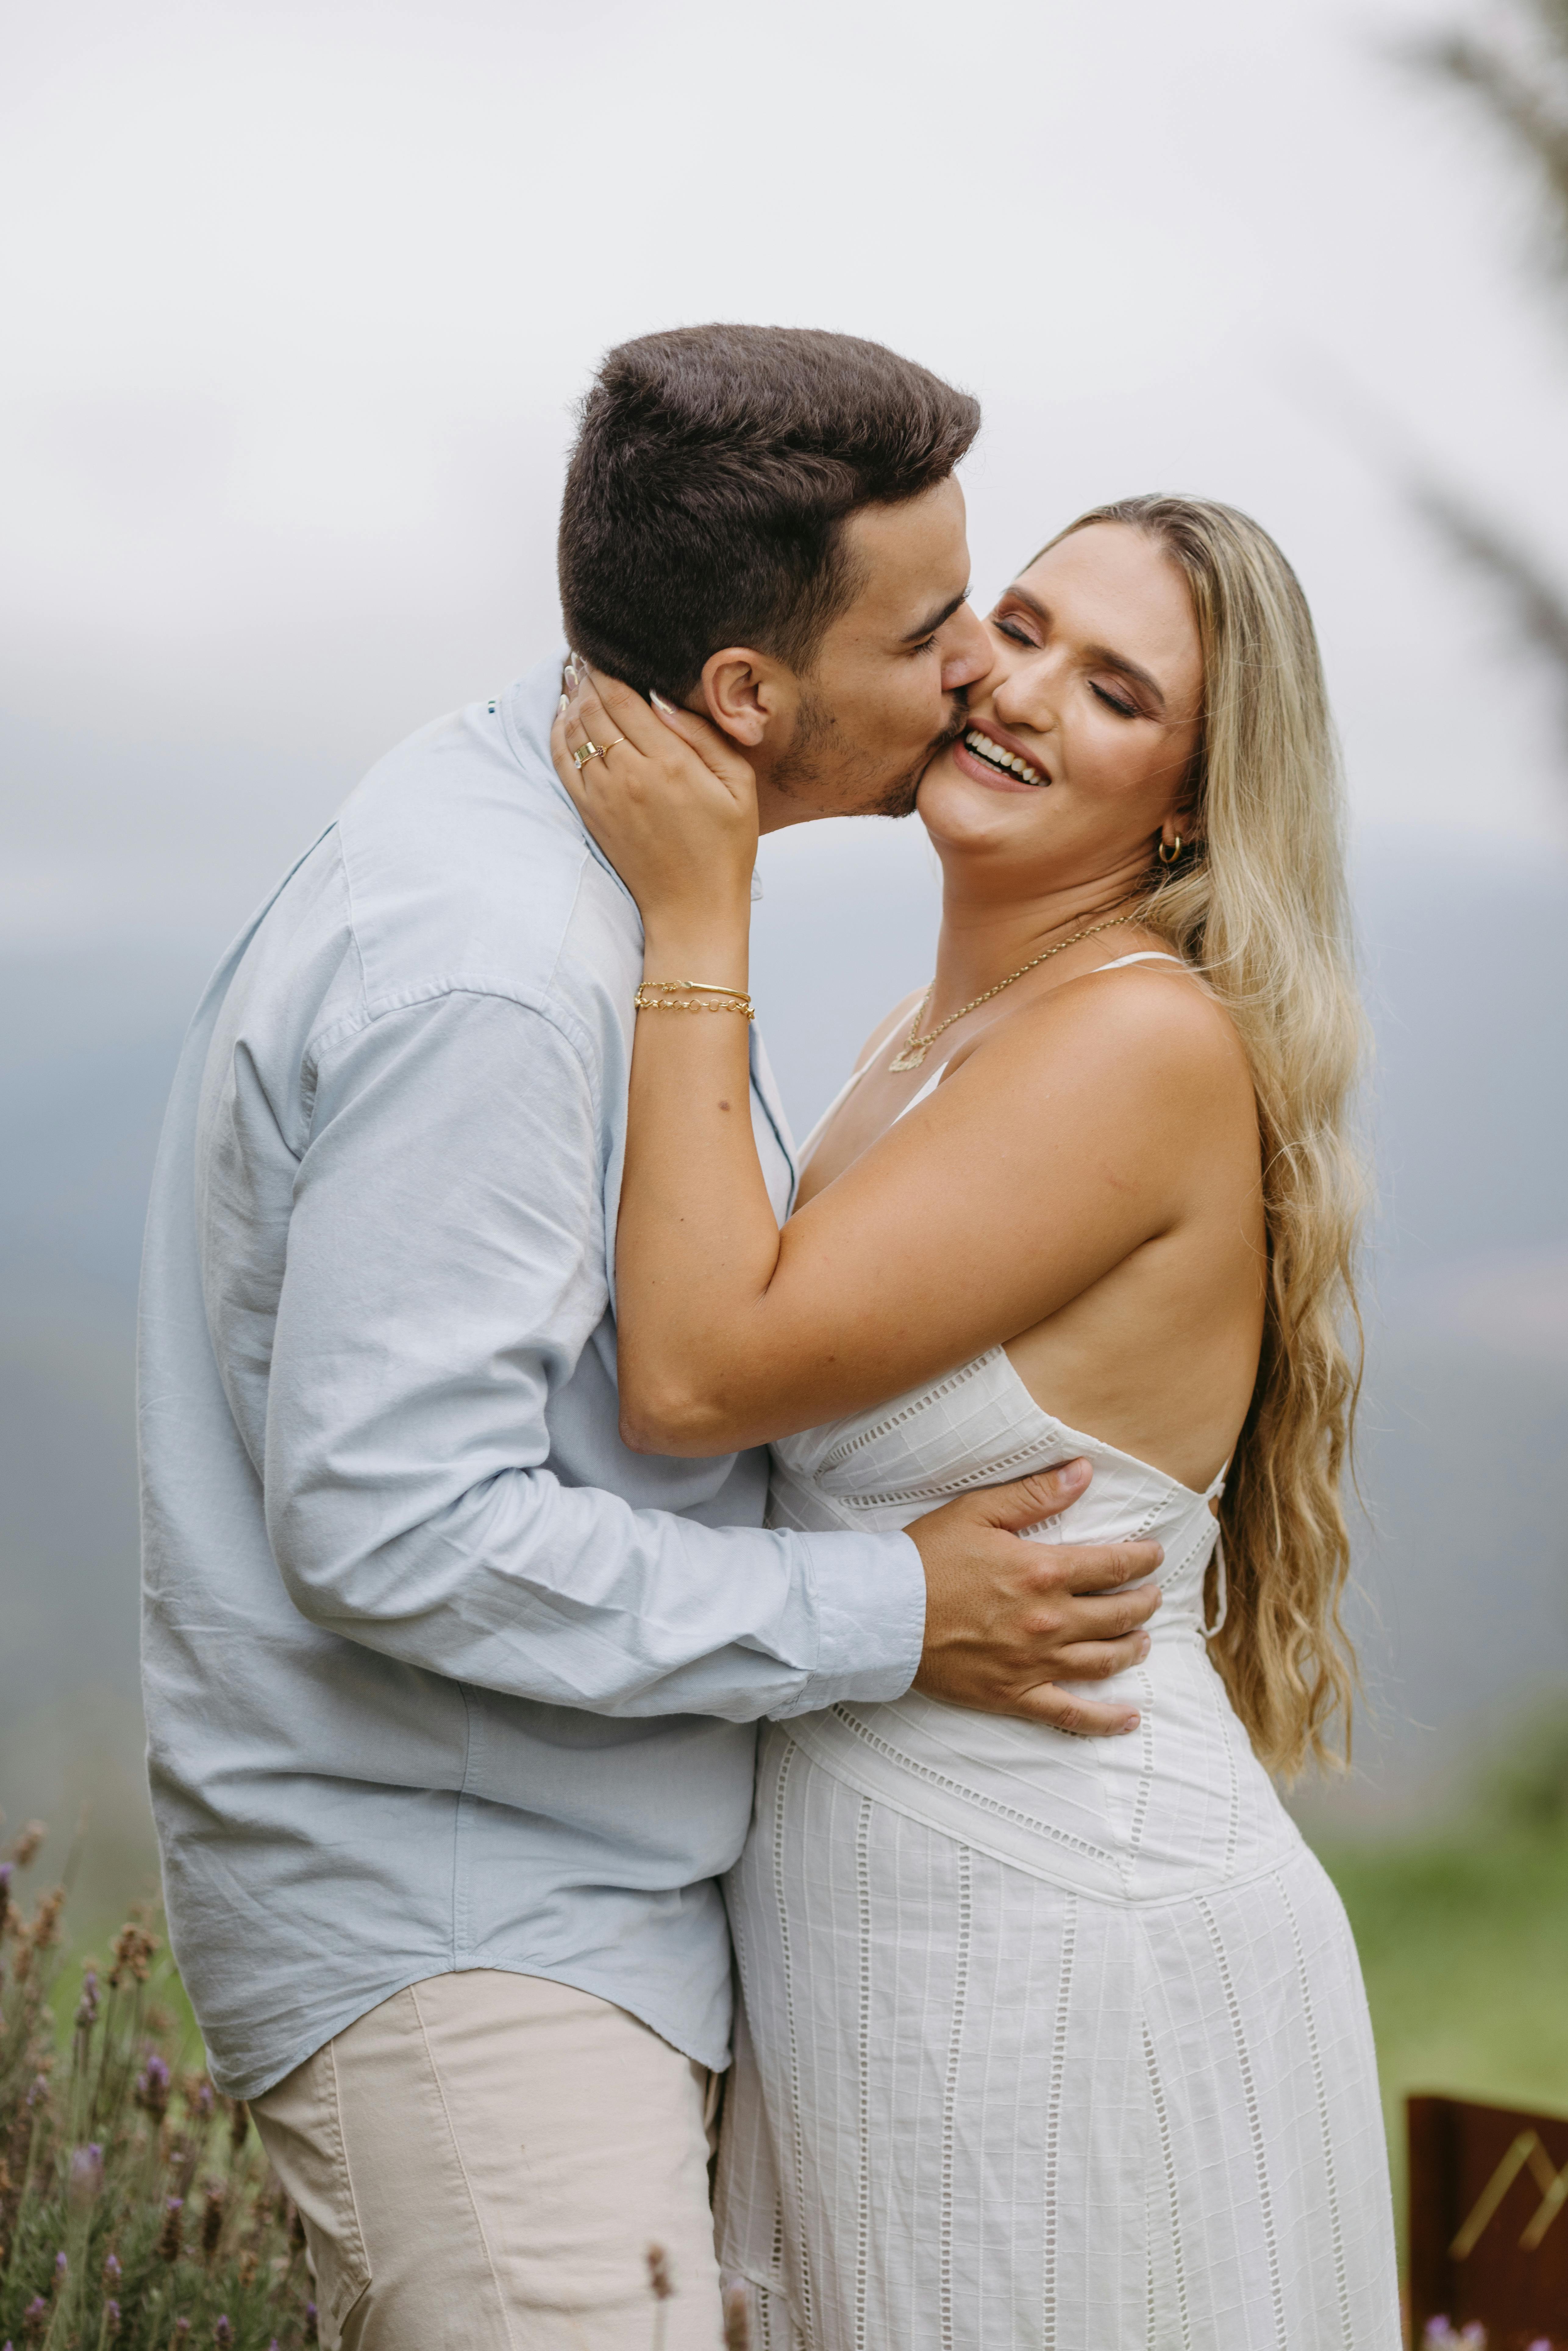 A husband kissing his happy wife | Source: Pexels